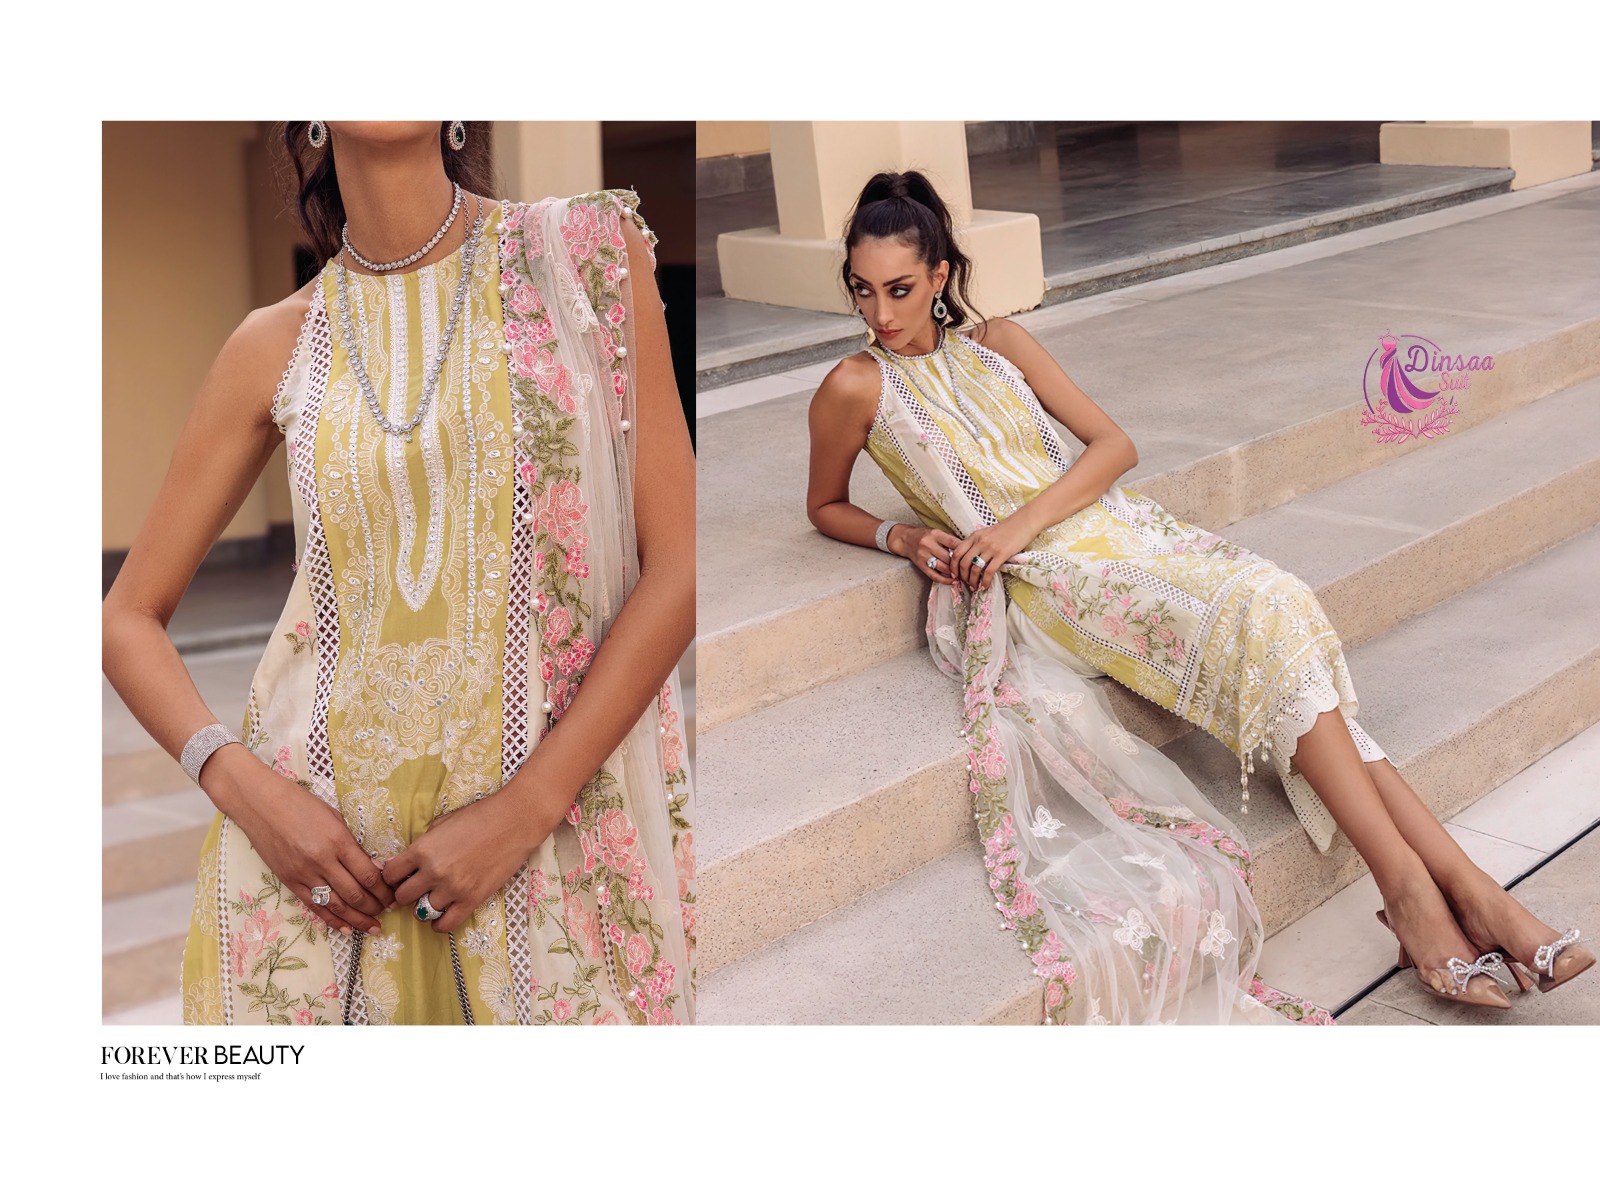 dinsaa suit Maria B Summer Collection Vol 2 cotton regal look salwar suit catalog